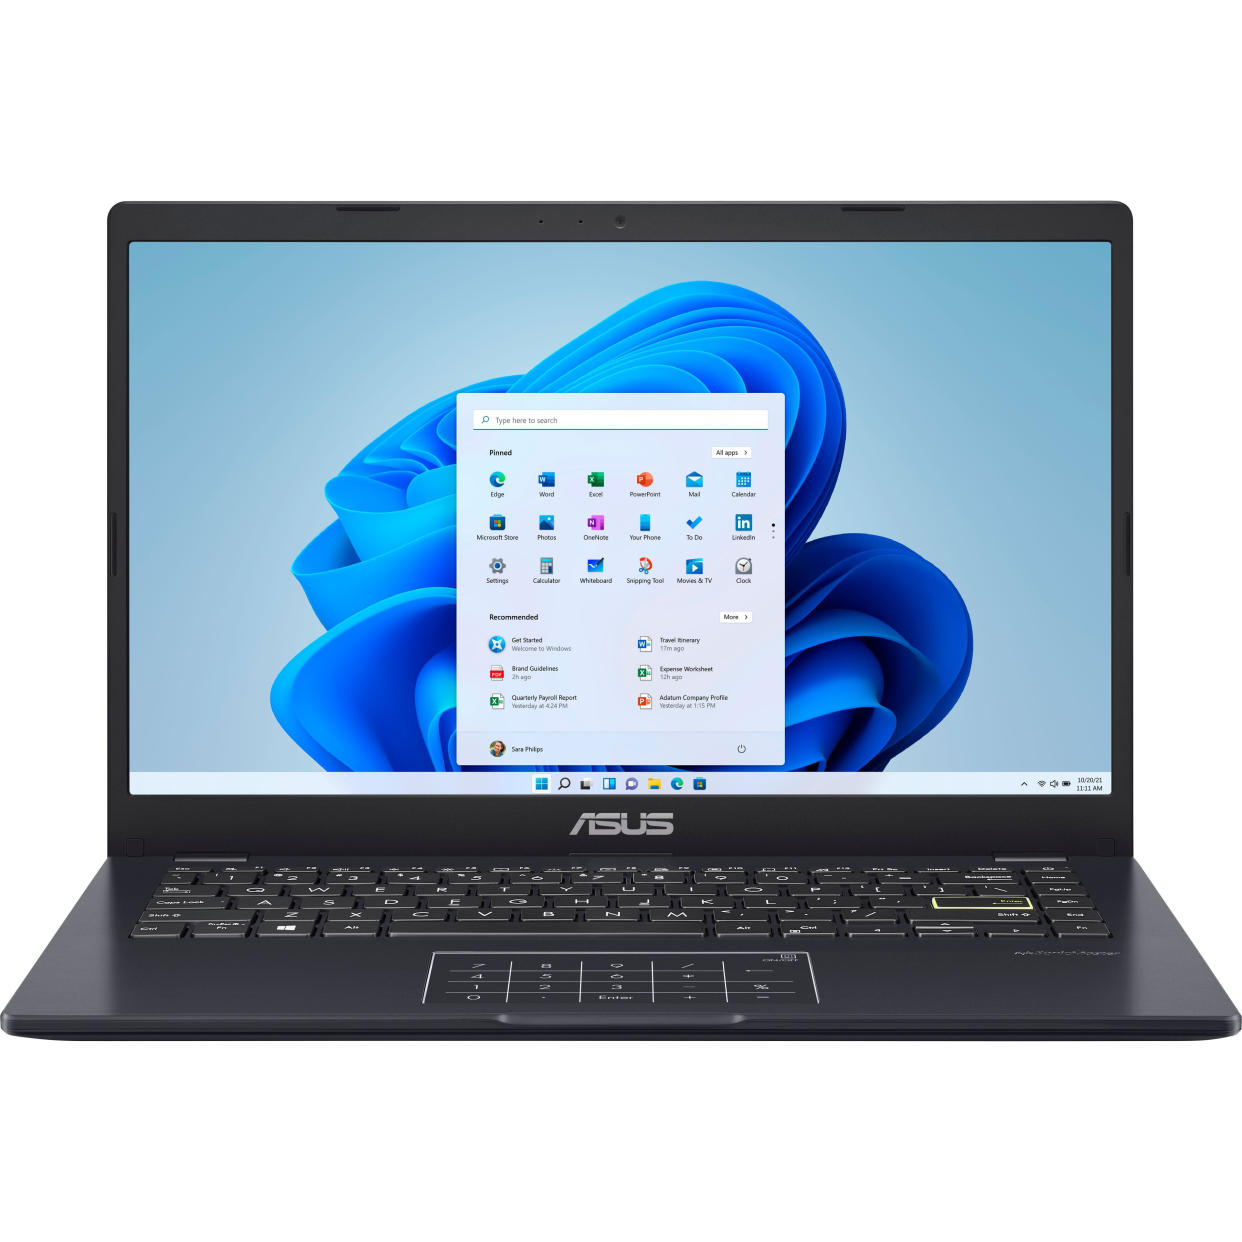 ASUS laptop, prime day alternatives